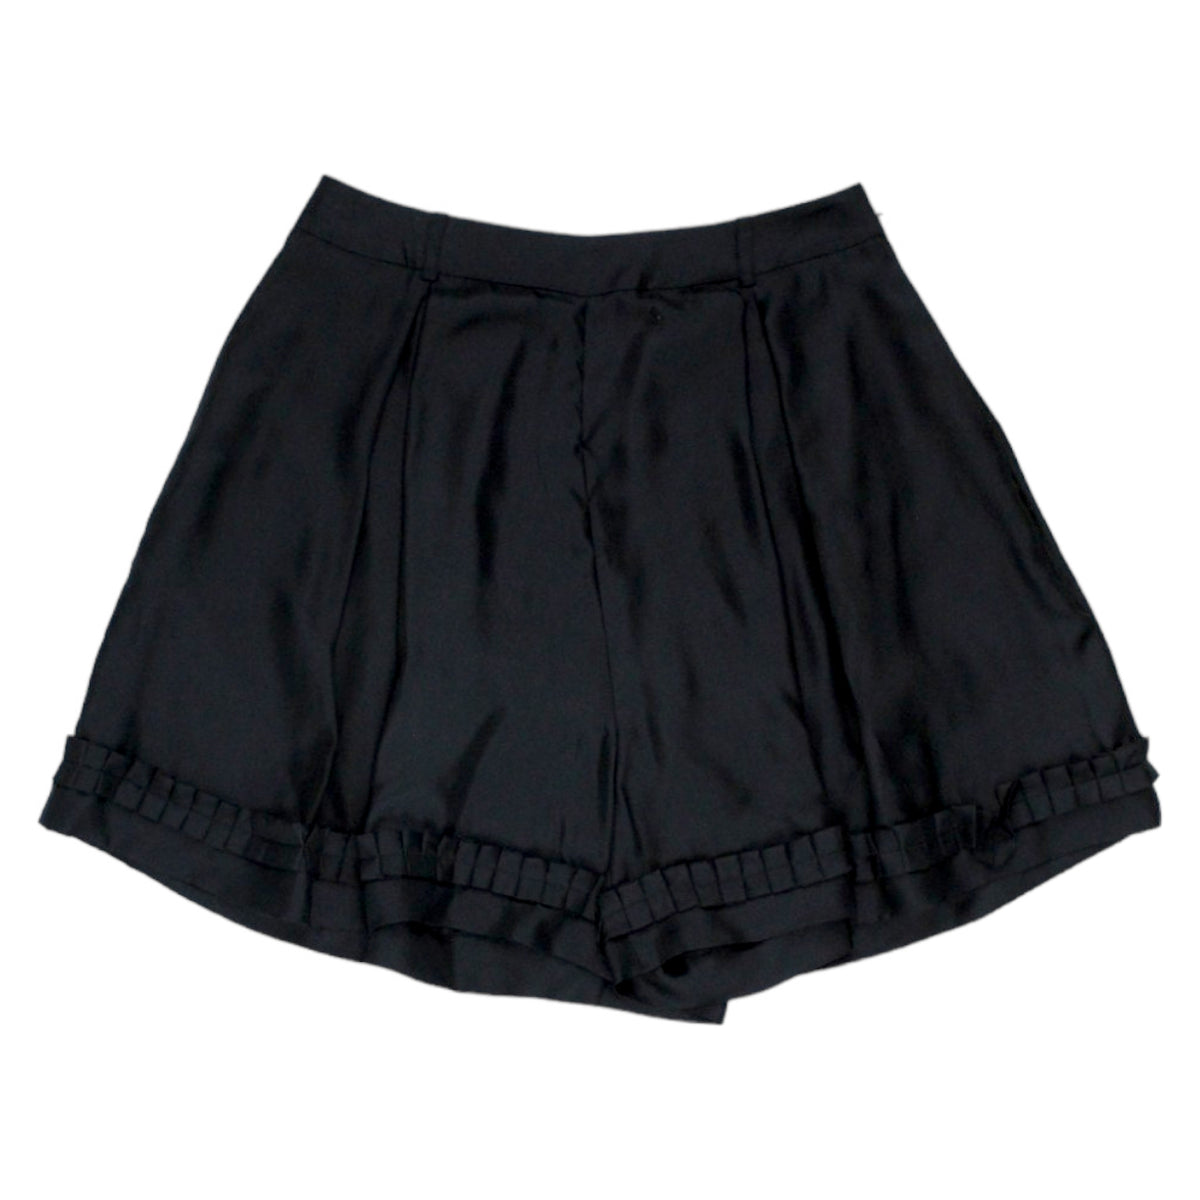 Orla Kiely Black Satin Frilled Shorts